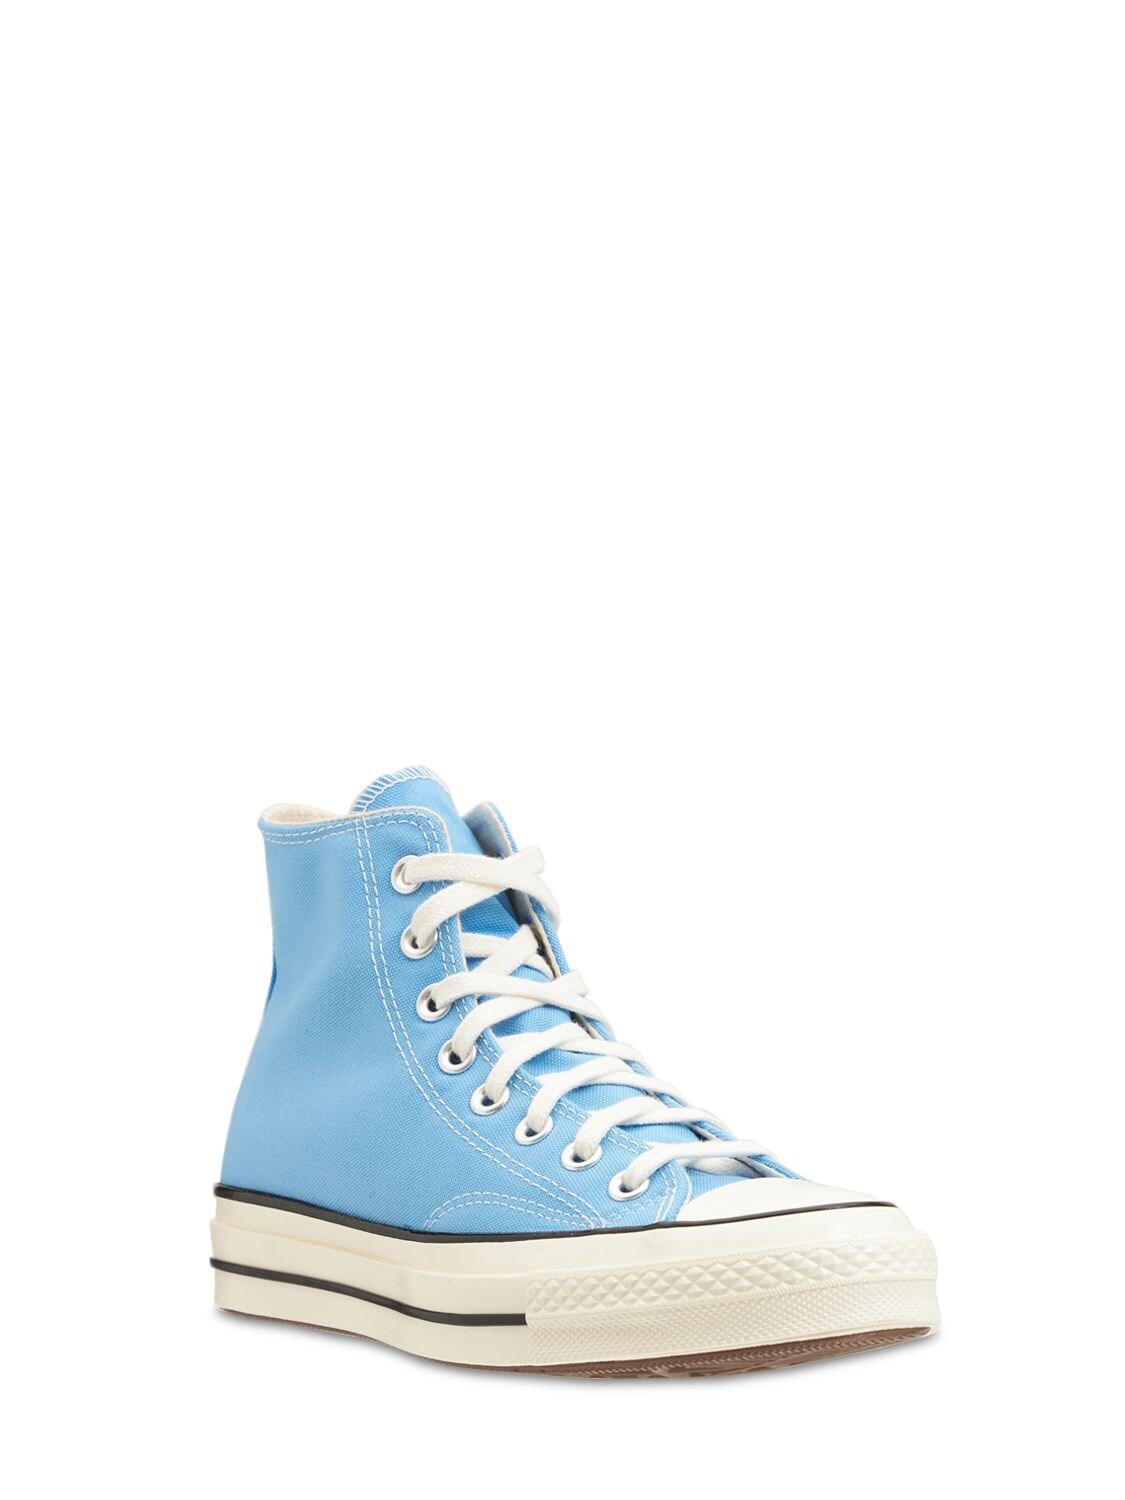 Converse Canvas Chuck 70 Hi Sneakers in University Blue (Blue) | Lyst